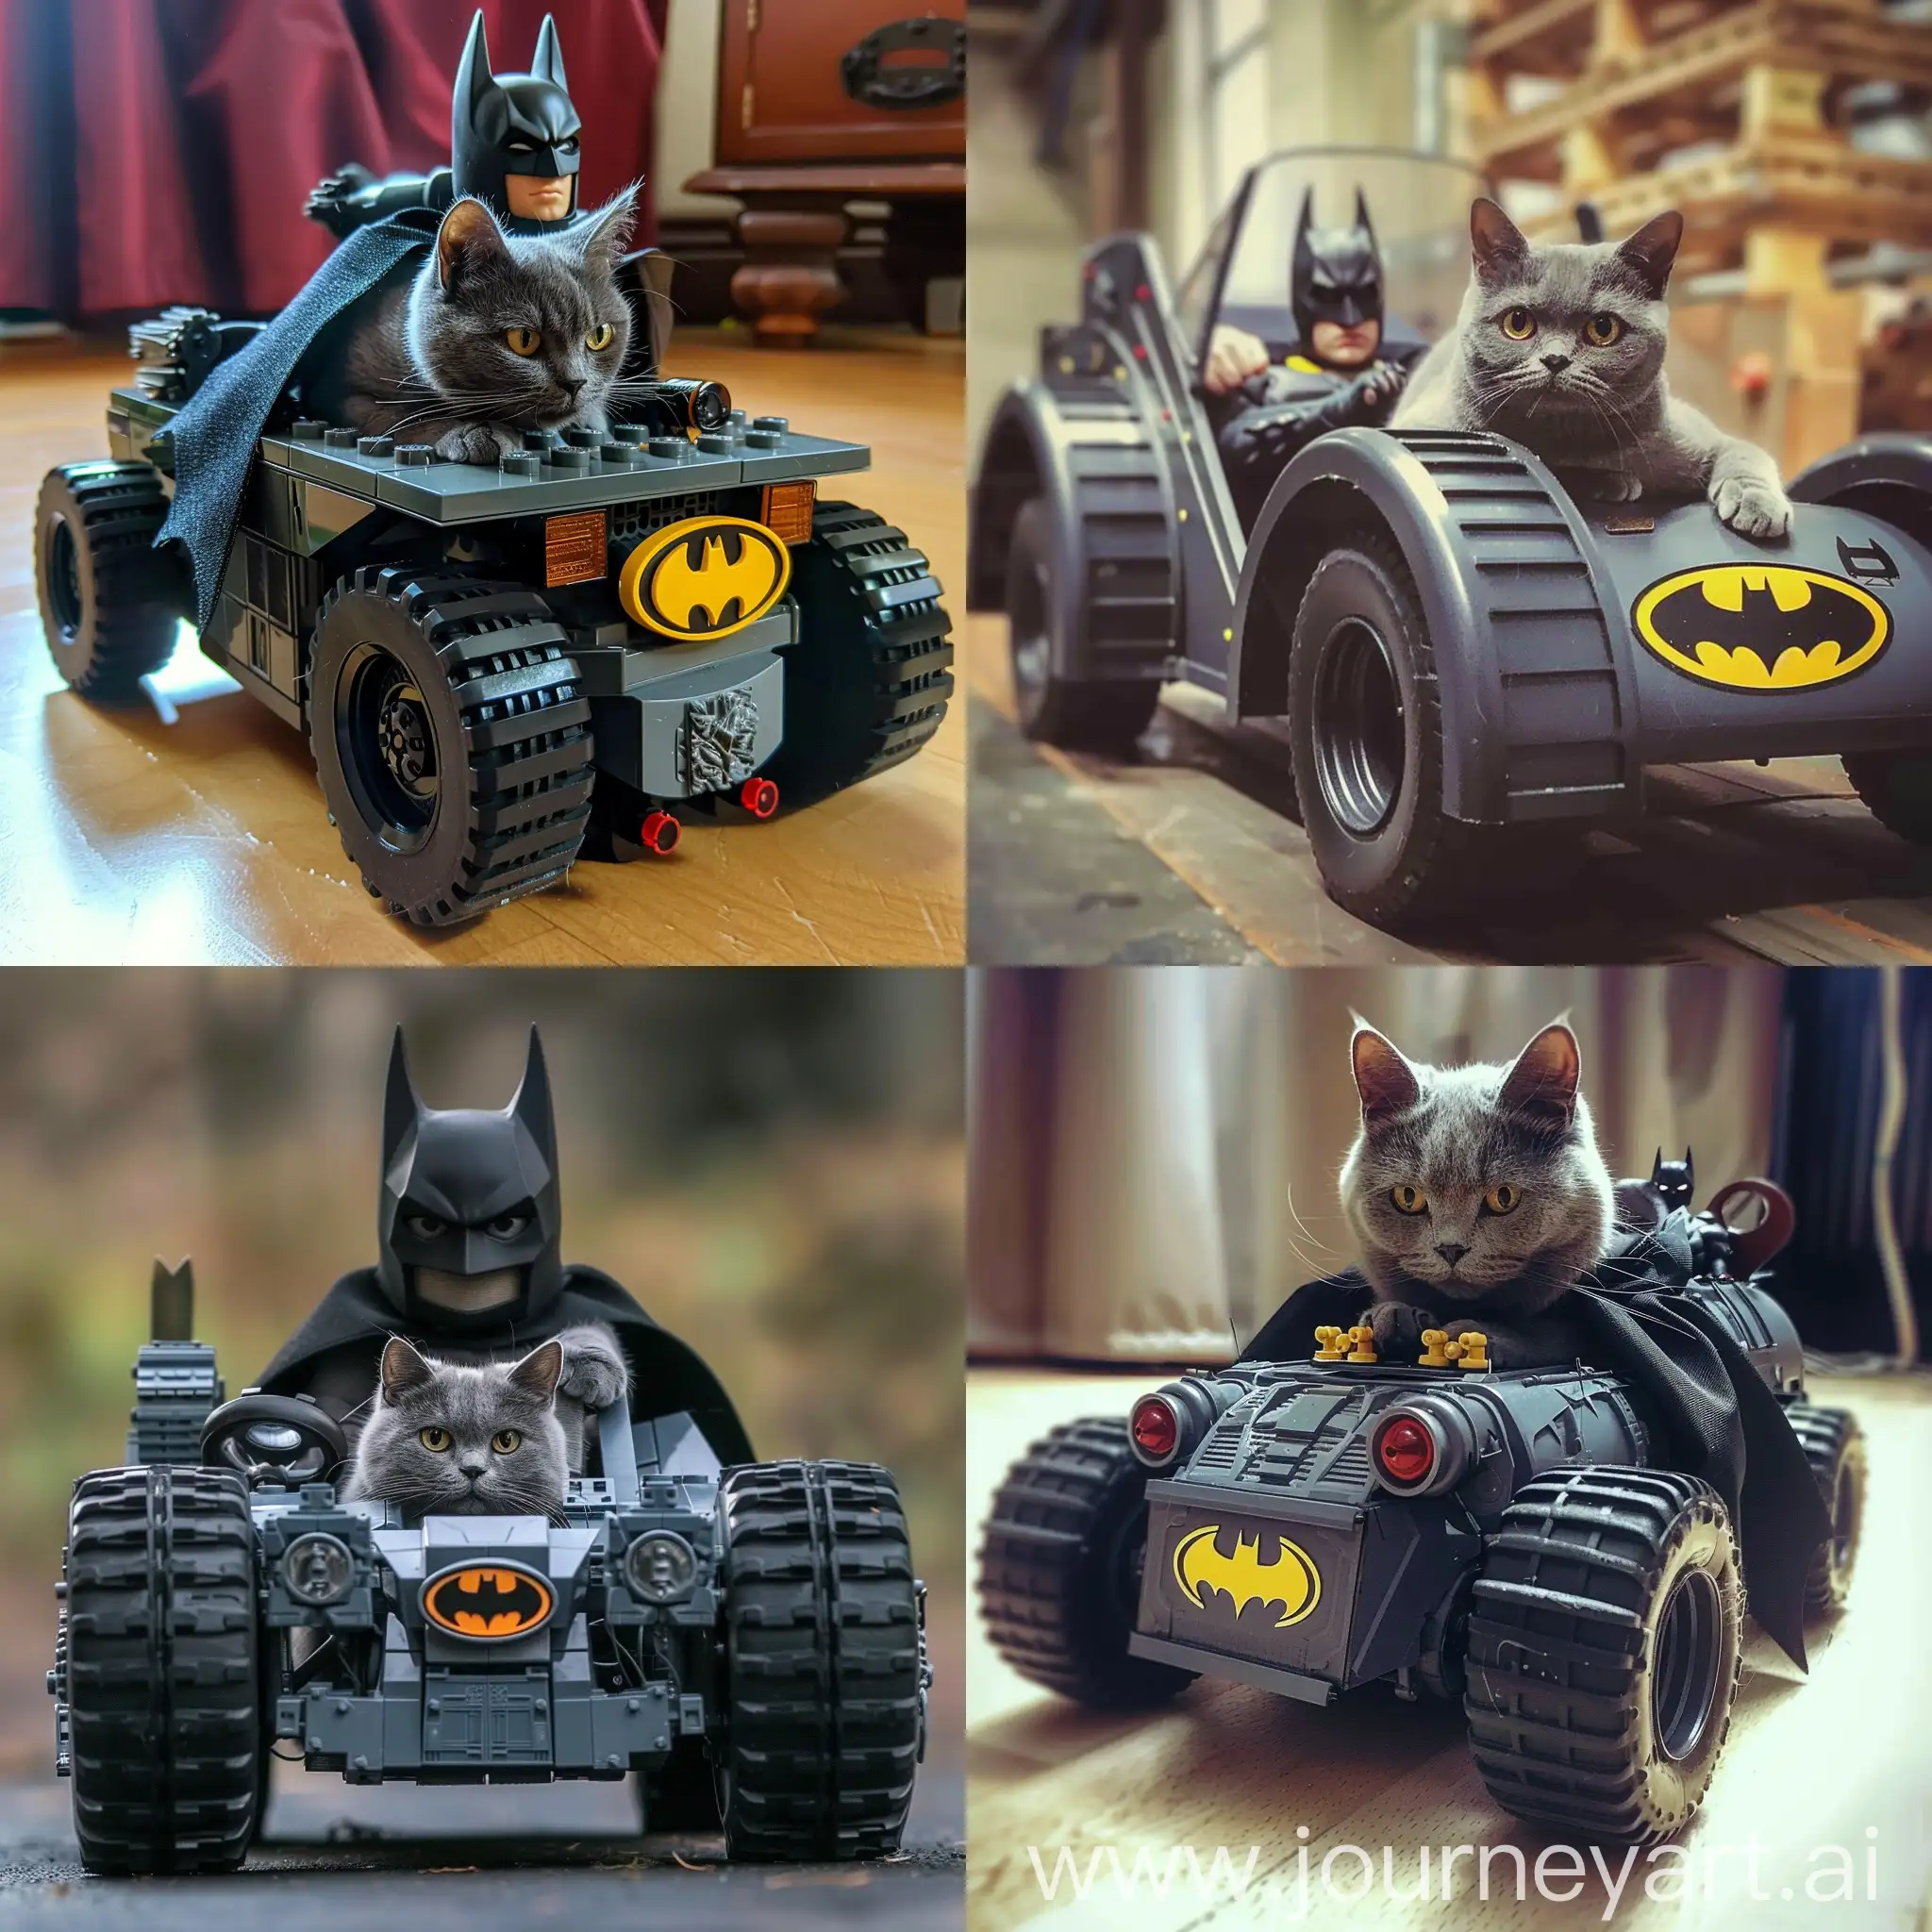 grey cat driving the batman mobile
